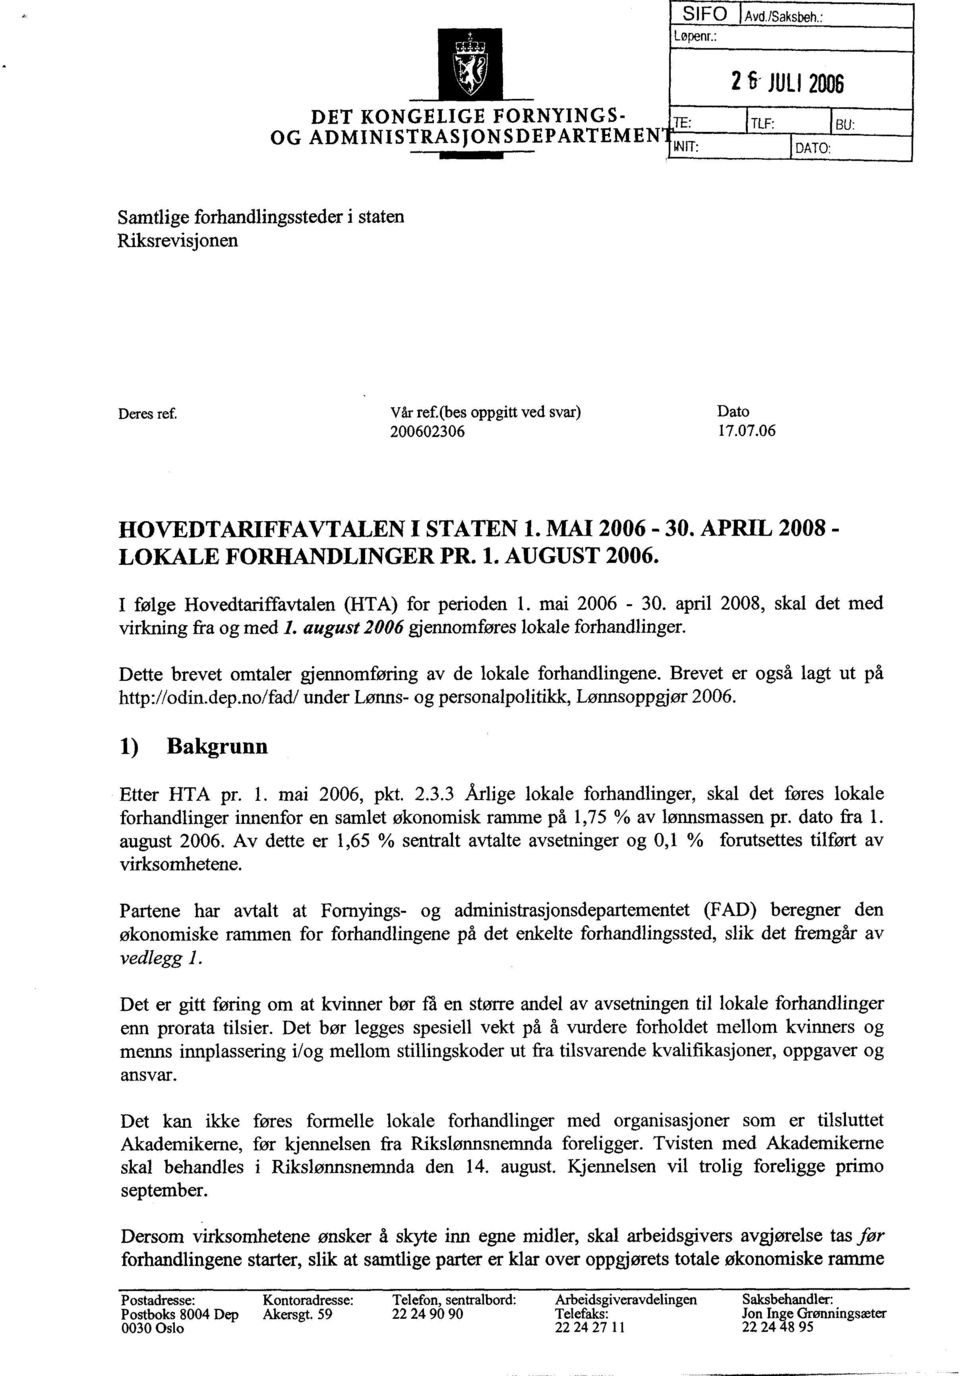 mai 2006-30. april 2008, skal det med virkning fra og med 1. august2006 gjennomføres lokale forhandlinger. Dette brevet omtaler gjennomføring av de lokale forhandlingene.